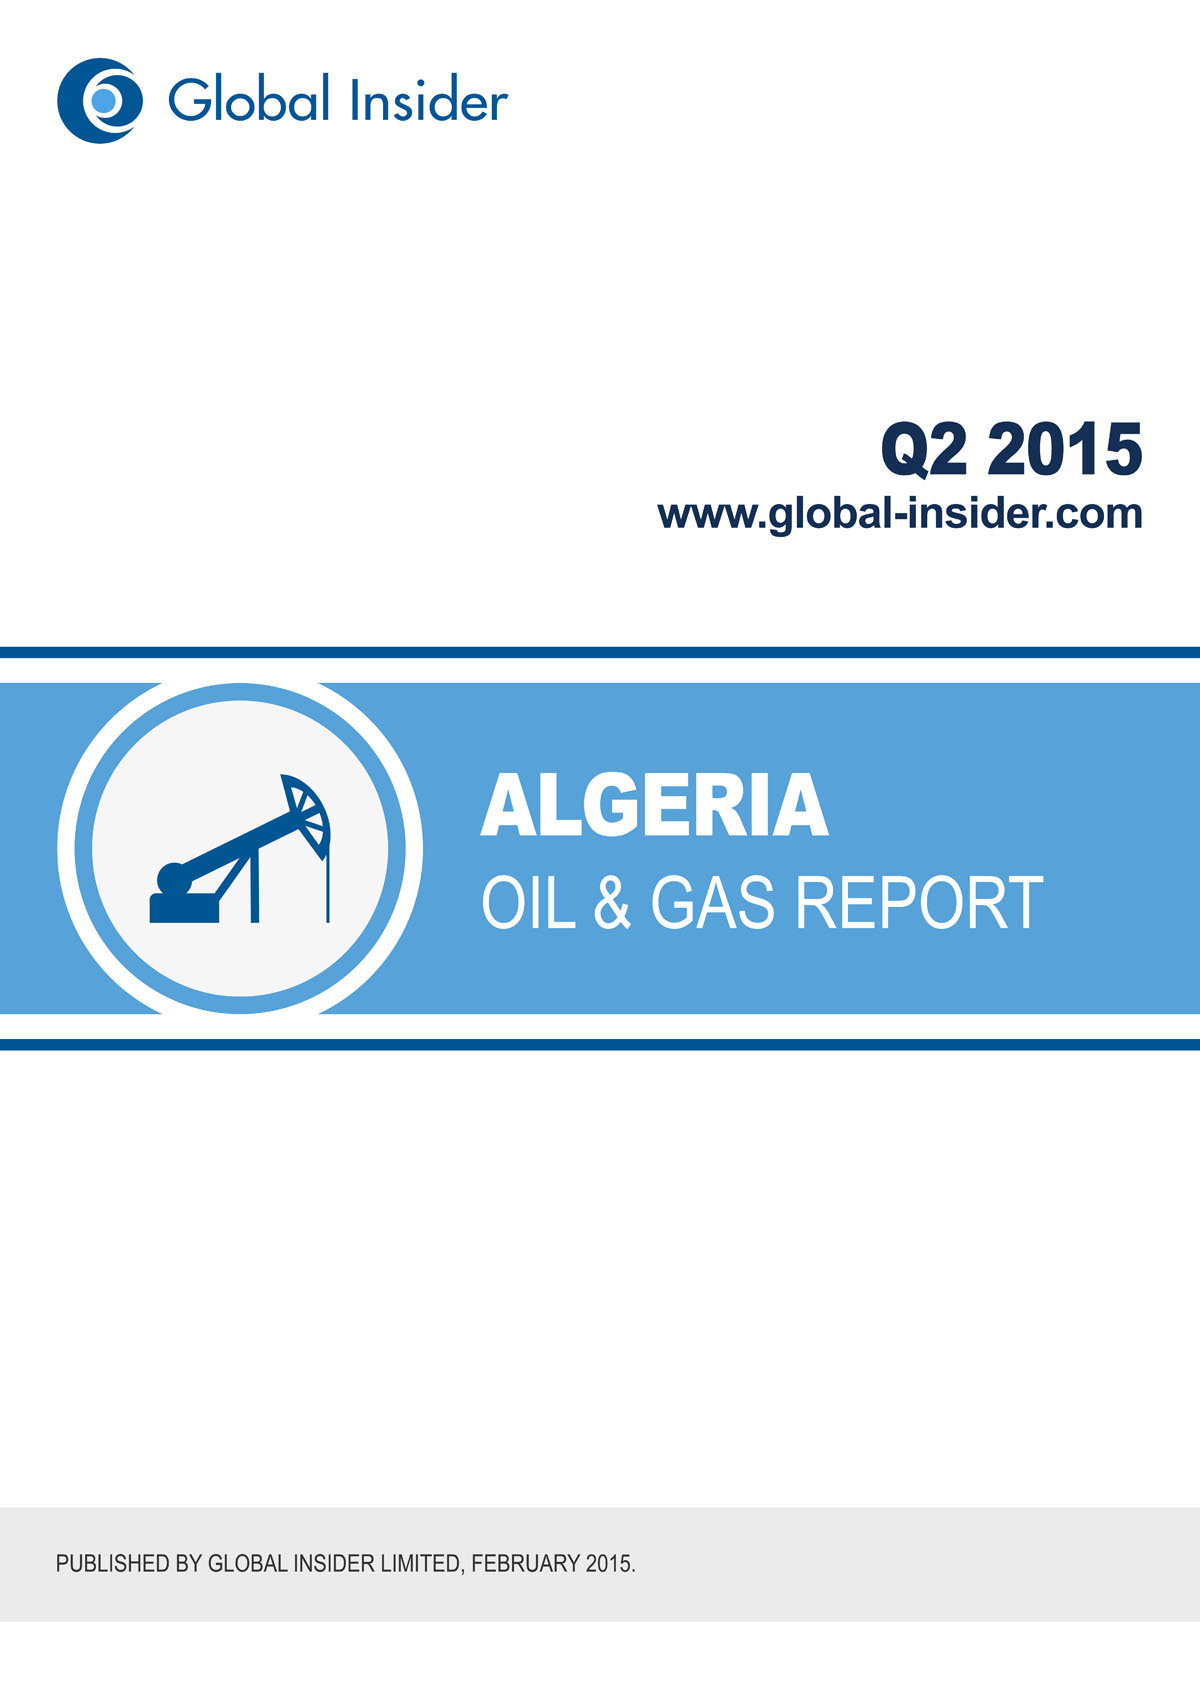 Algeria Oil & Gas Report